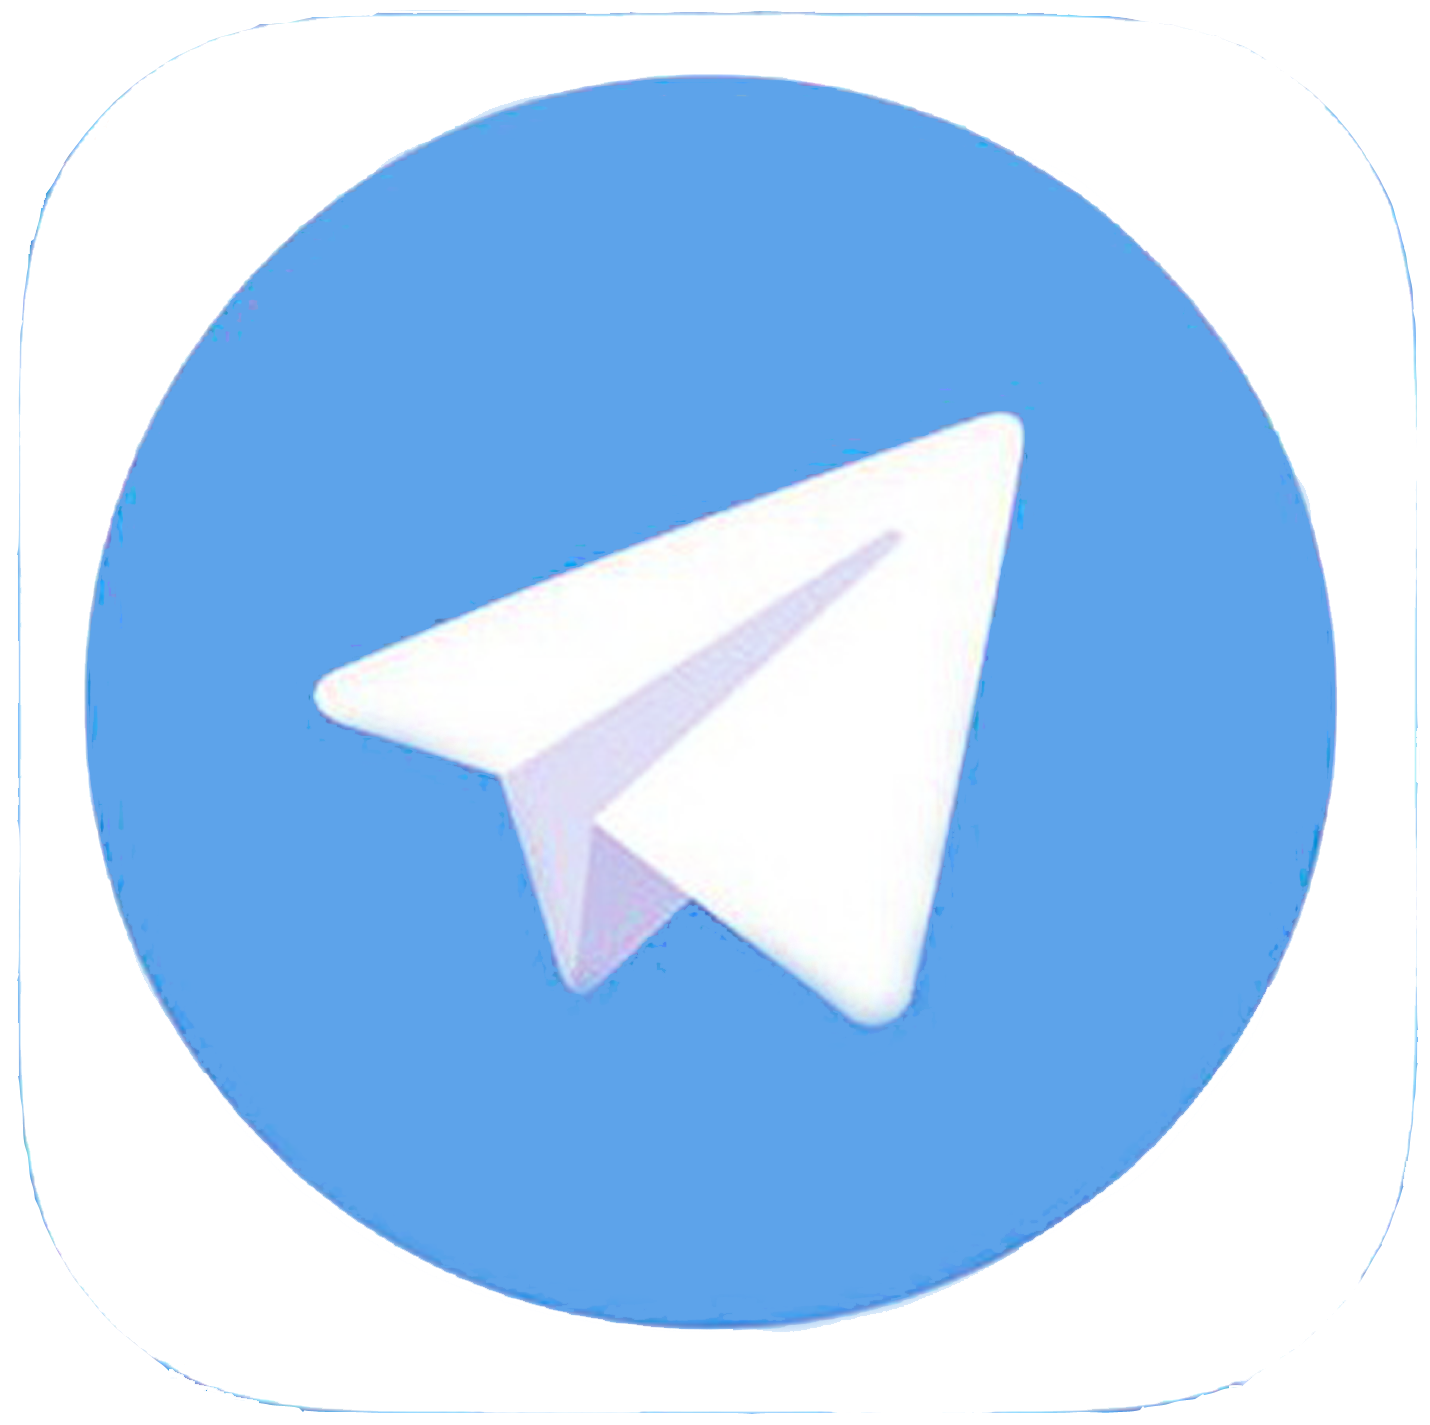 telegram1